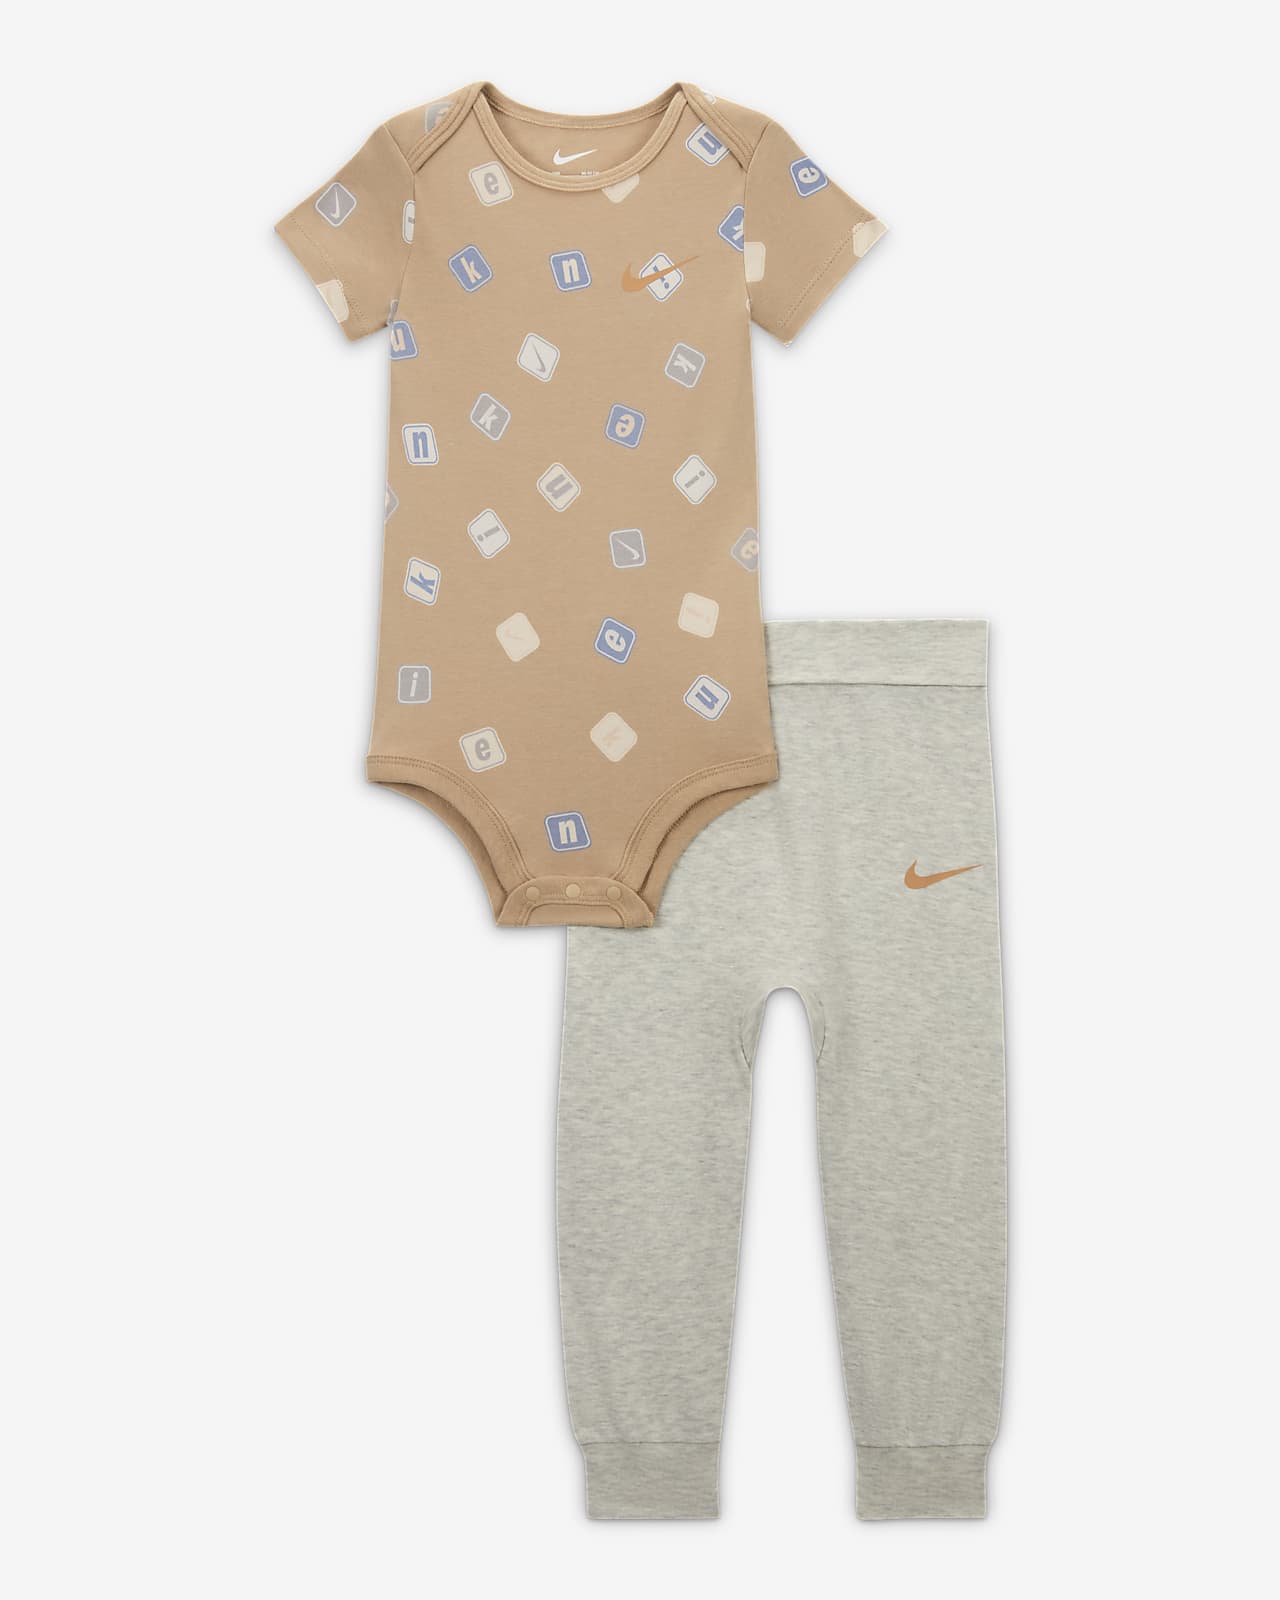 Nike Baby (12-24M) 2-Piece Printed Bodysuit Set